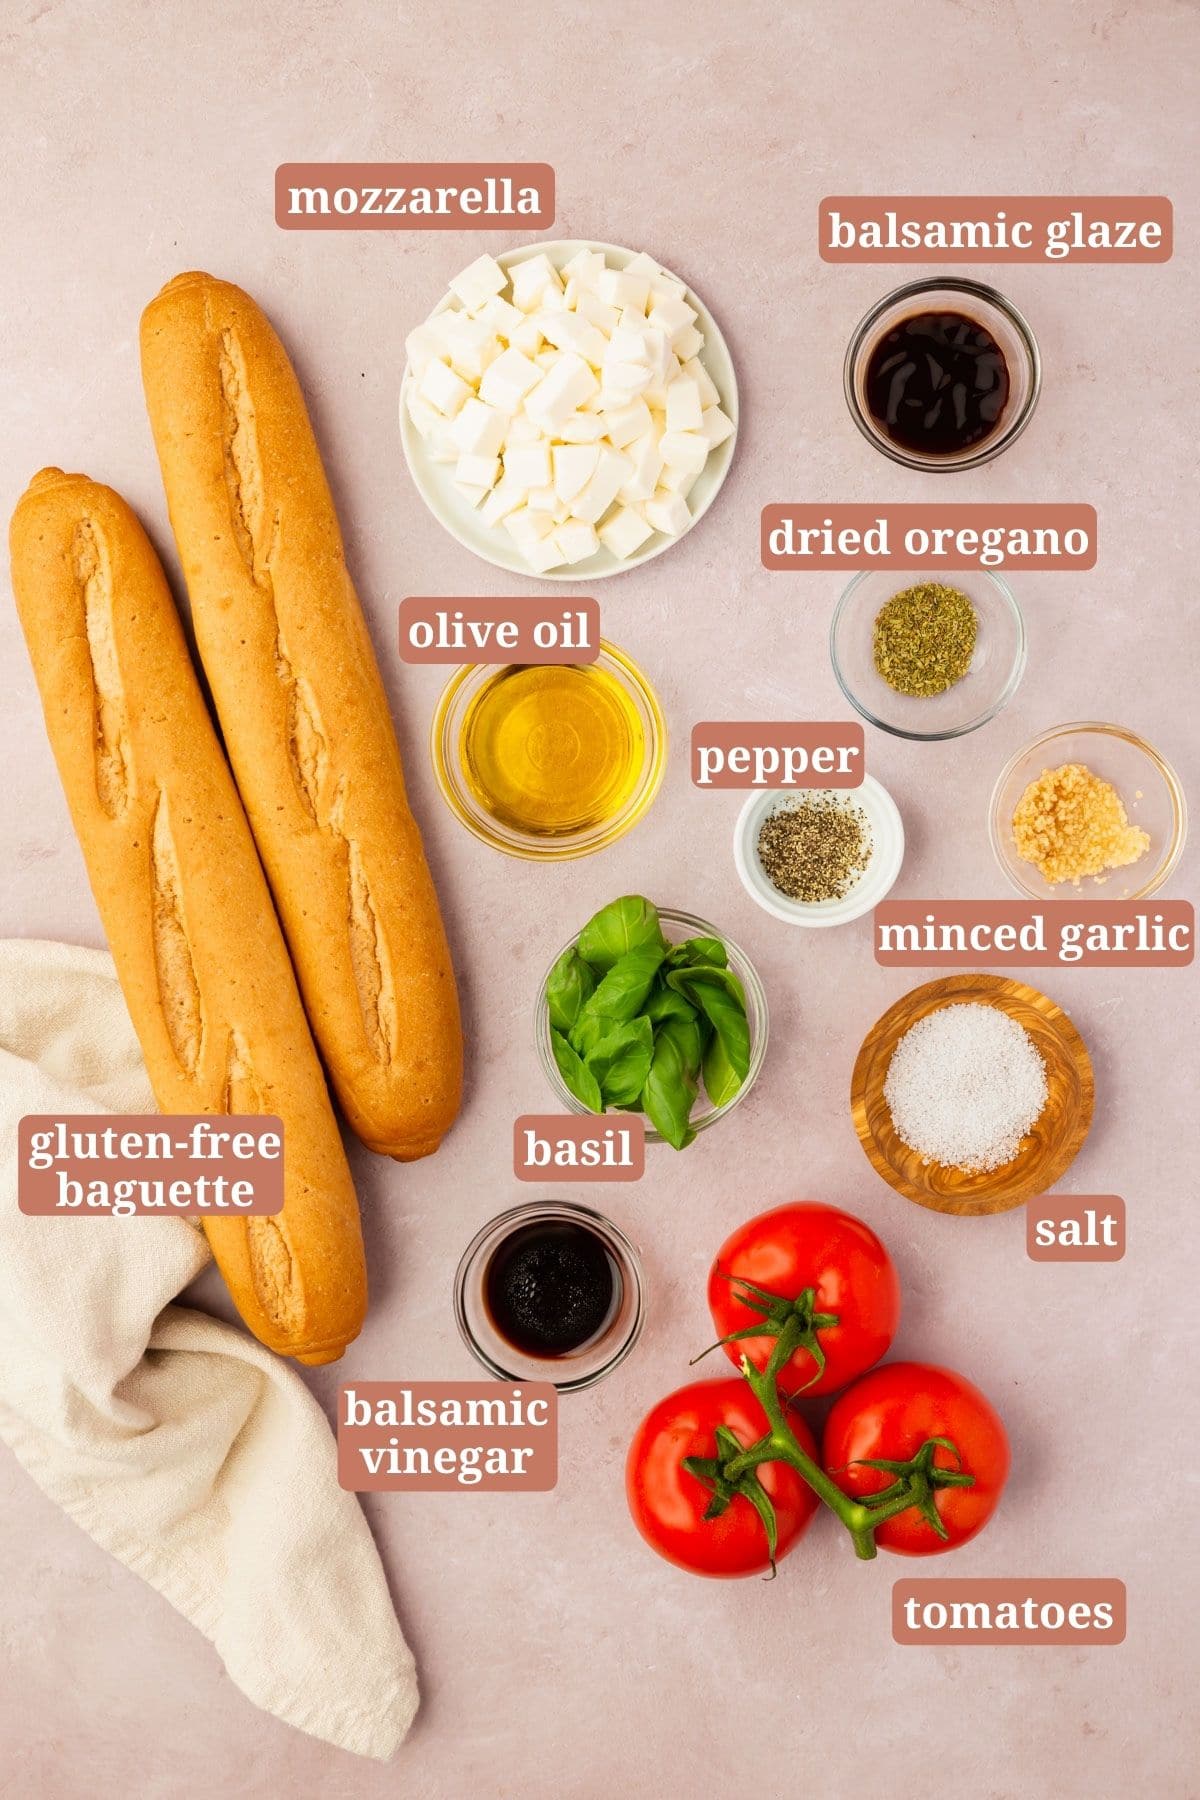 Ingredients for making bruschetta with mozzarella on a pink table: gluten-free baguette, mozzarella, balsamic glaze, basil, olive oil, pepper, oregano, garlic, salt, tomatoes and balsamic vinegar.